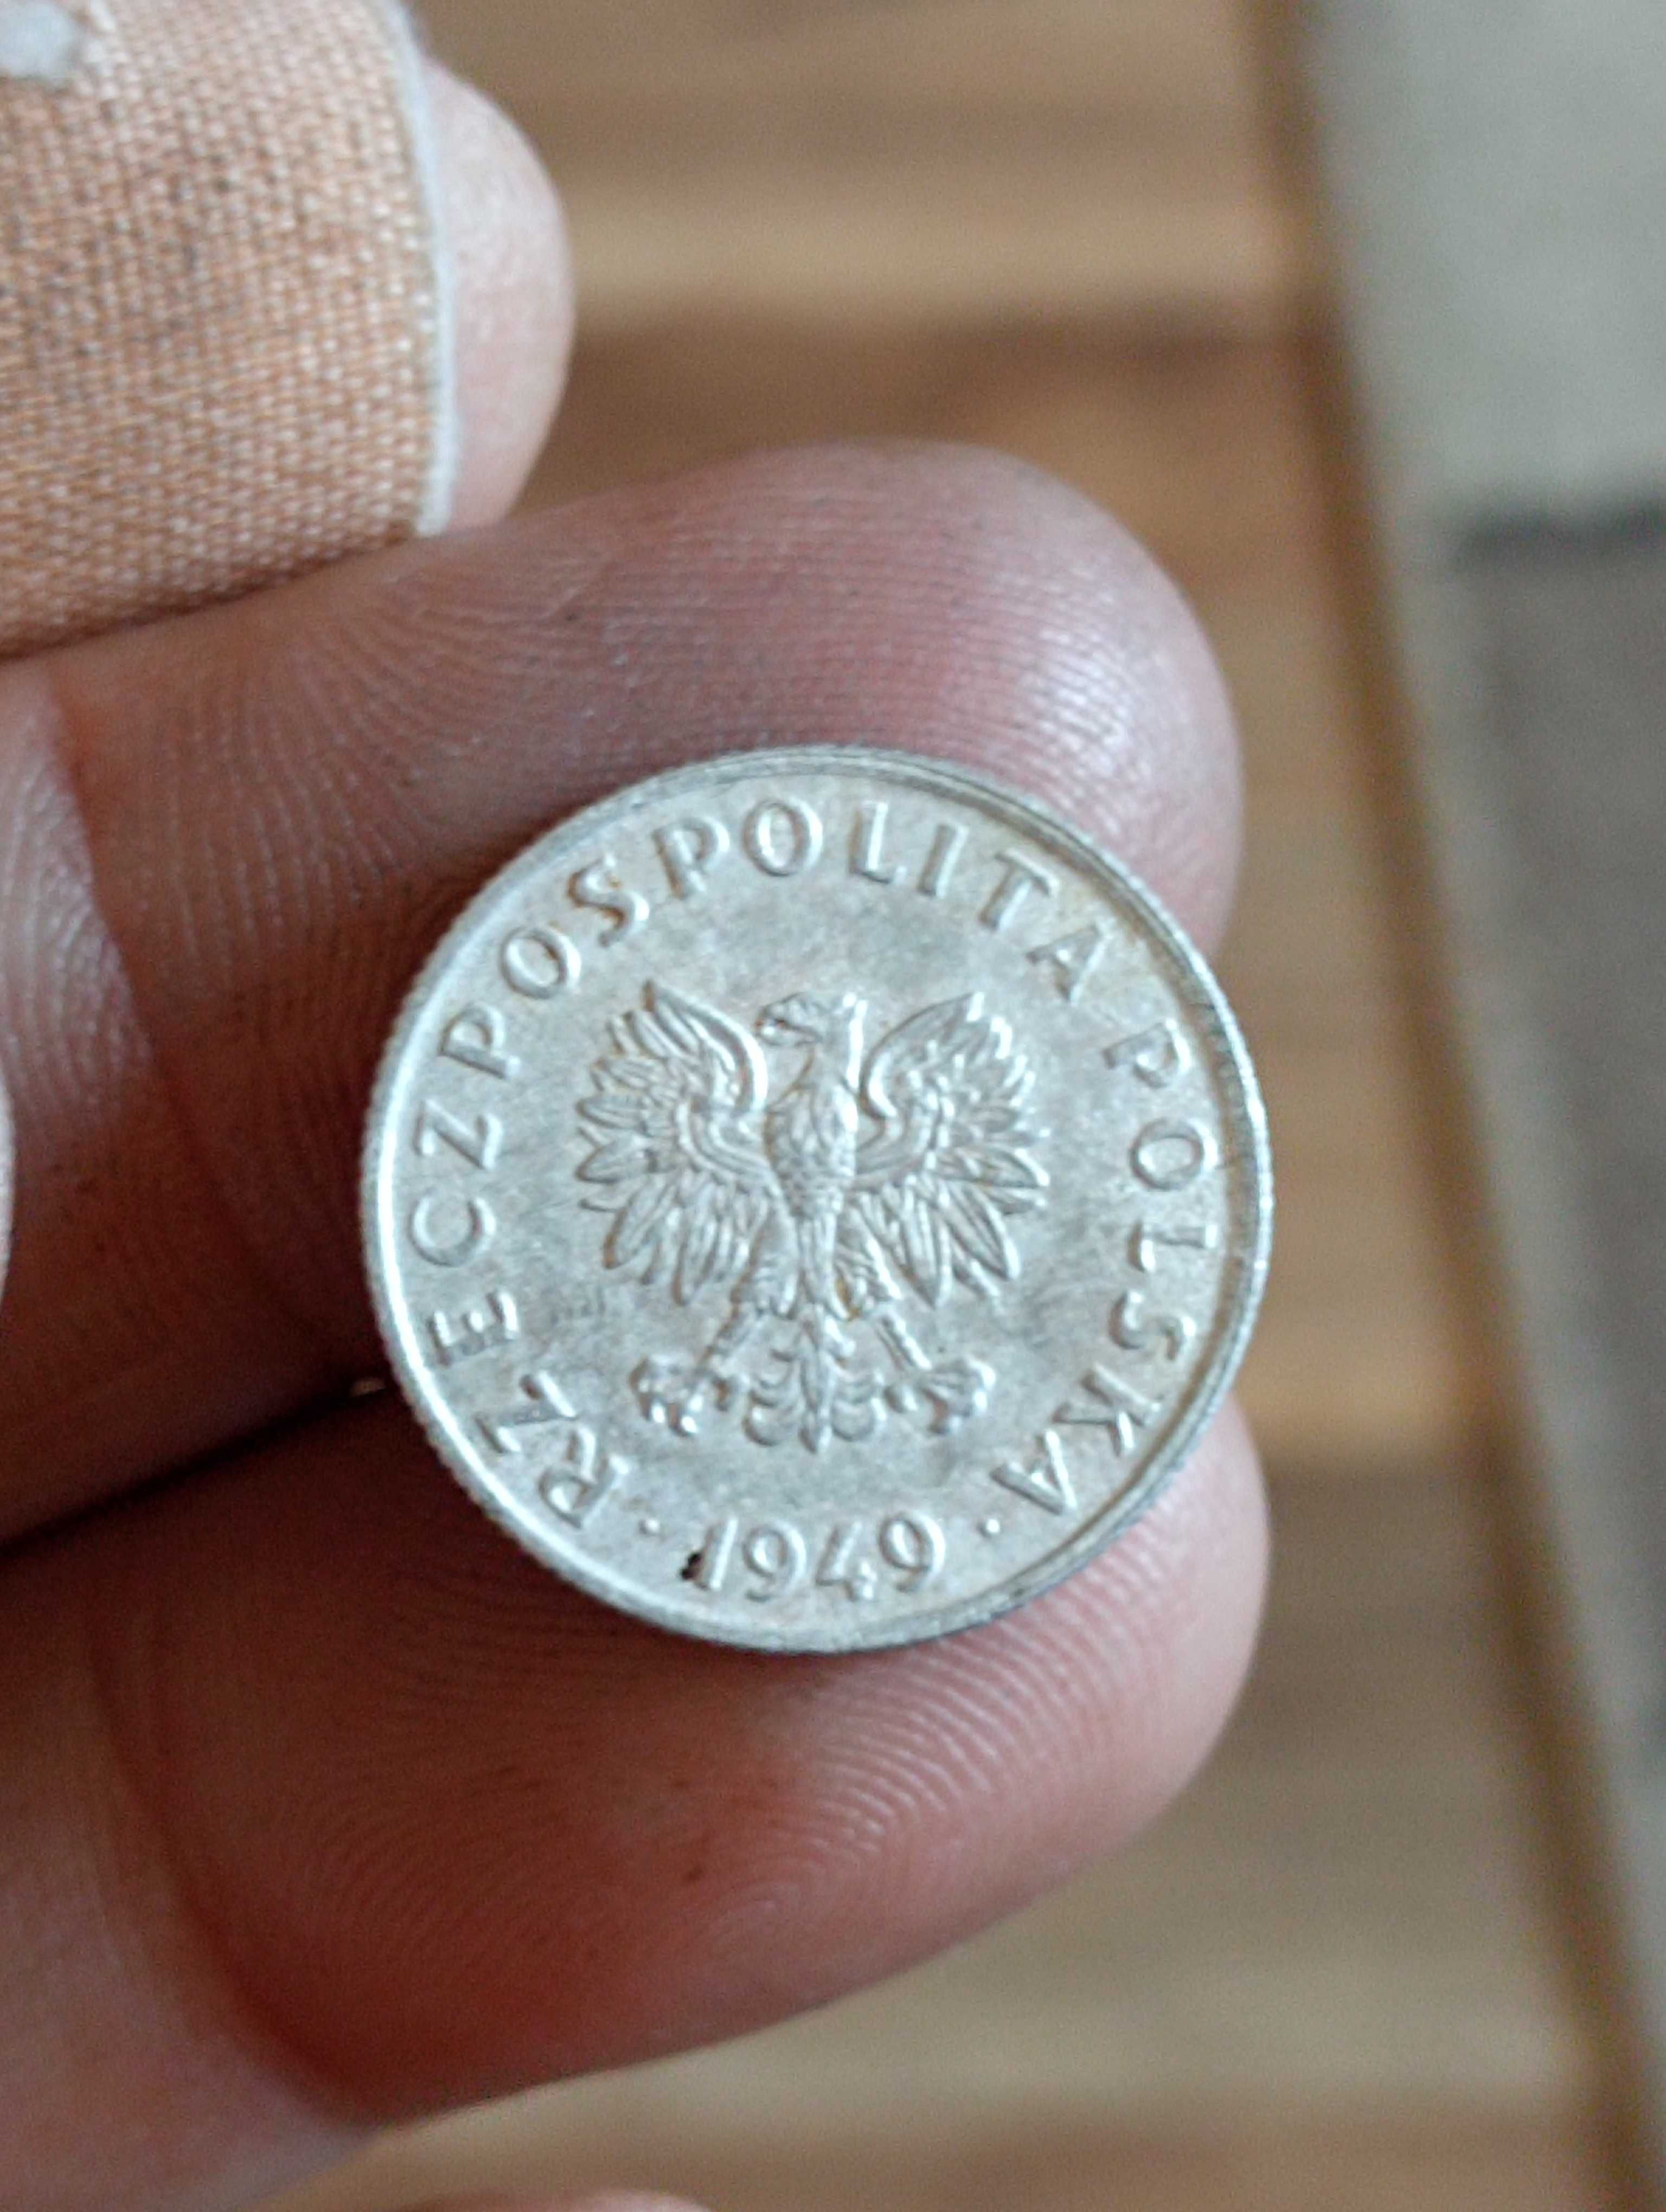 Spadam aluminium monetę 5 gorszy 1949 r bzm